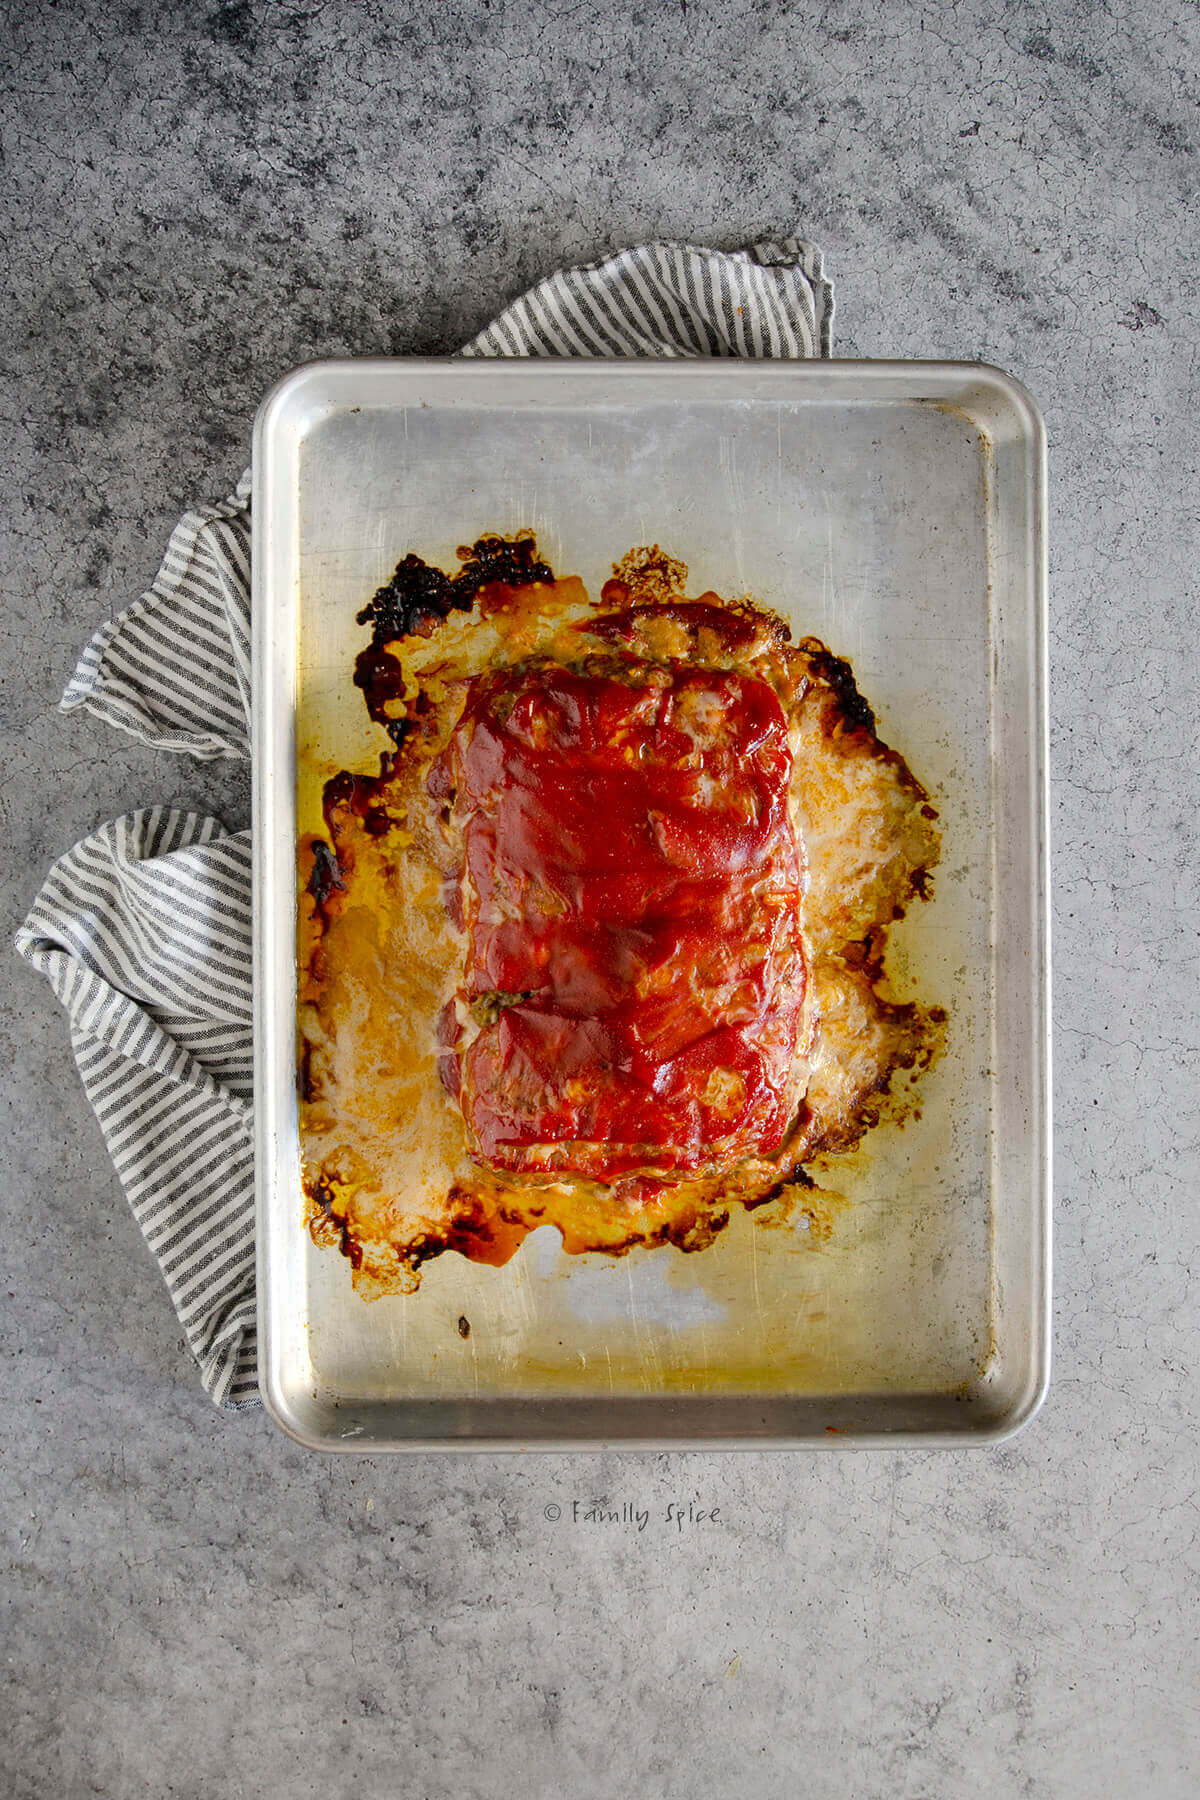 A meatloaf freshly baked on a baking sheet